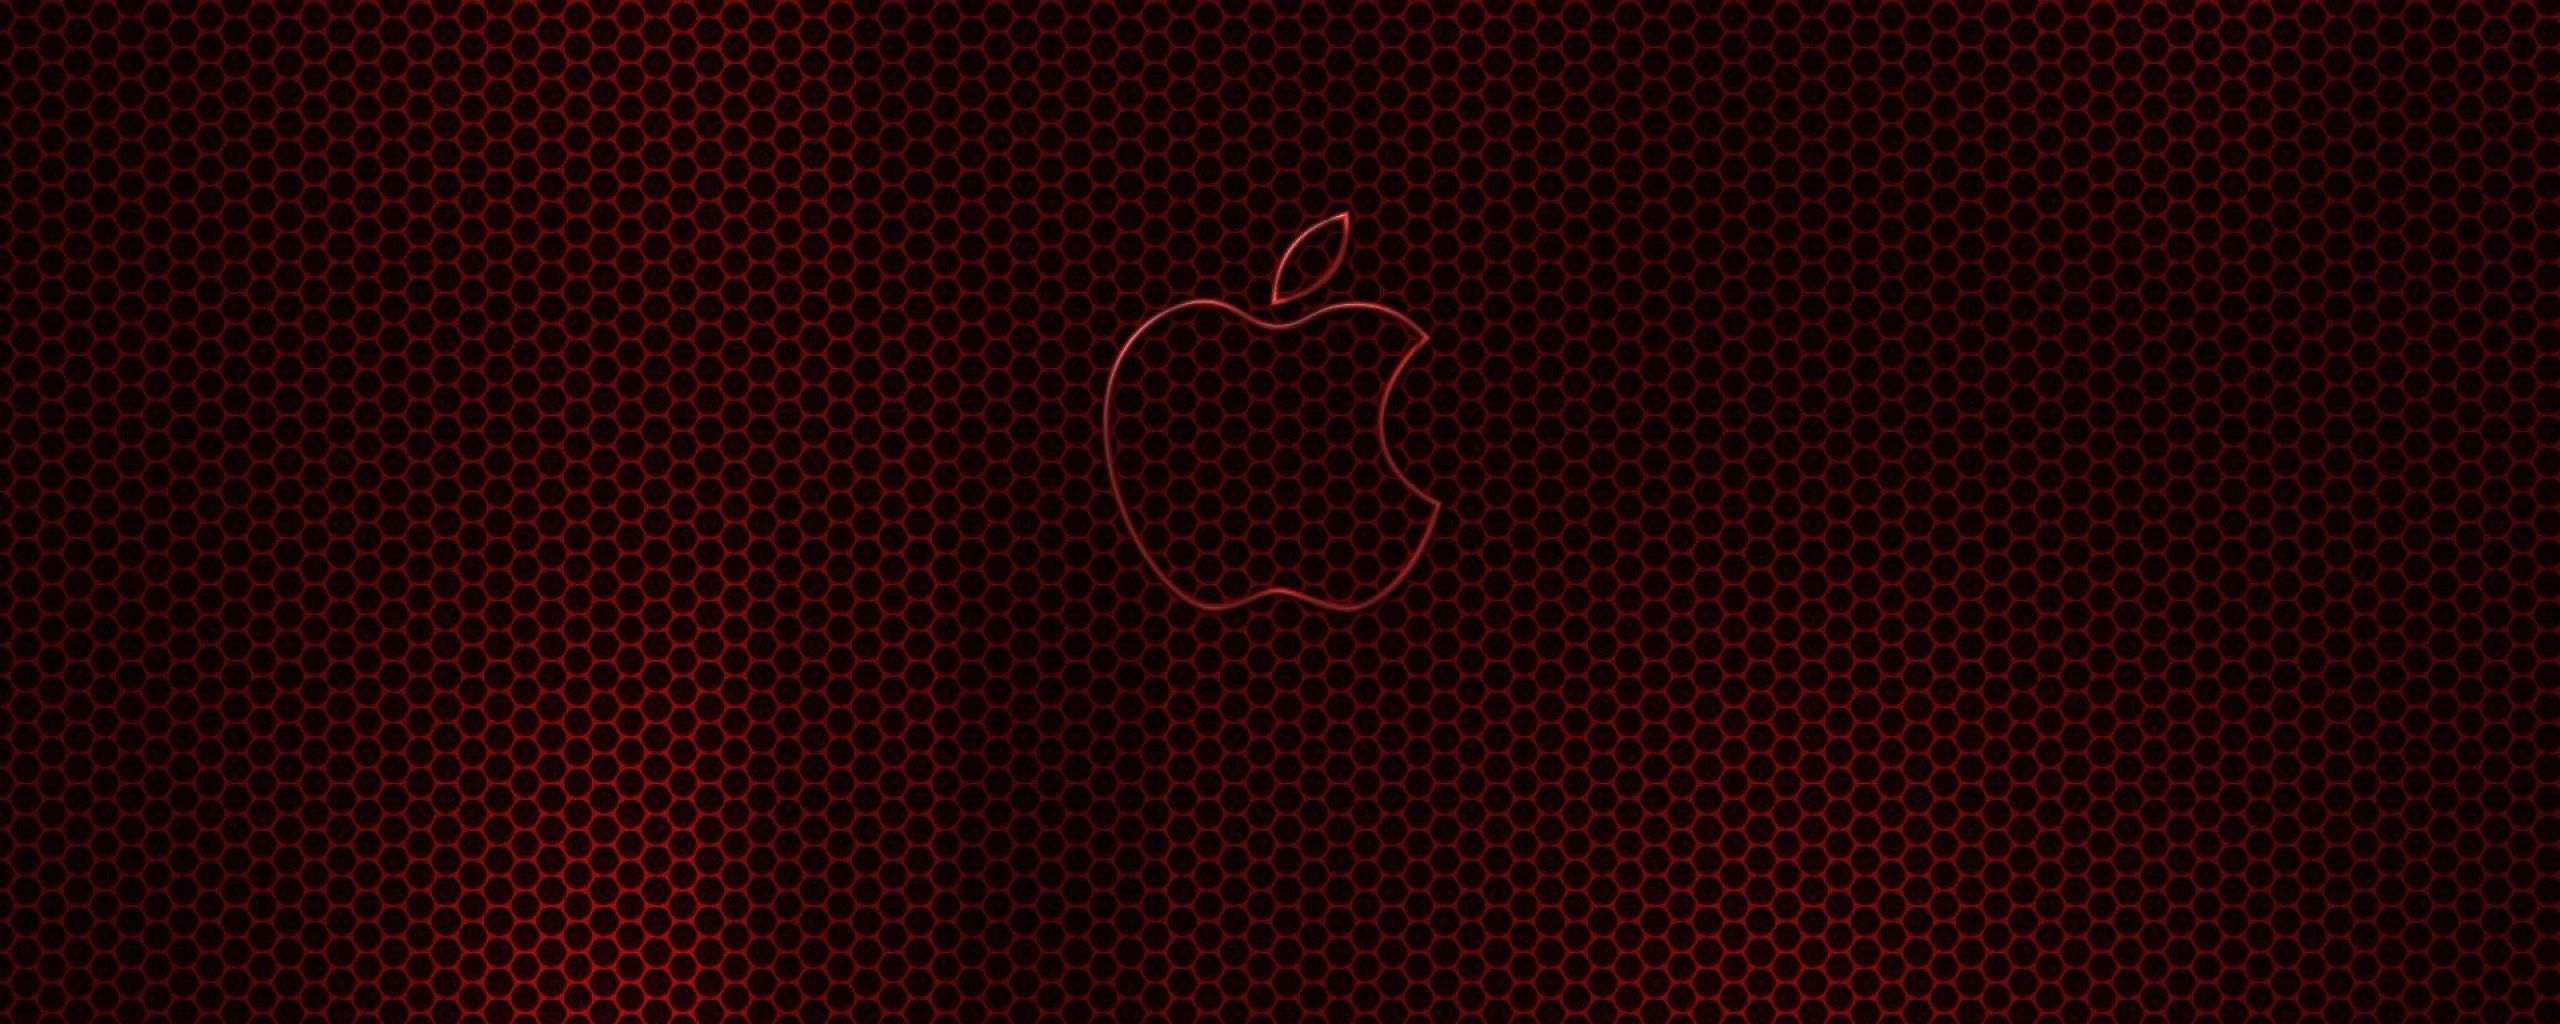 Apple, Dark, Red, Glow, Free, Hd, Desktop, Wallpaper, Background, Image, High Res Wallpaper Image For Download